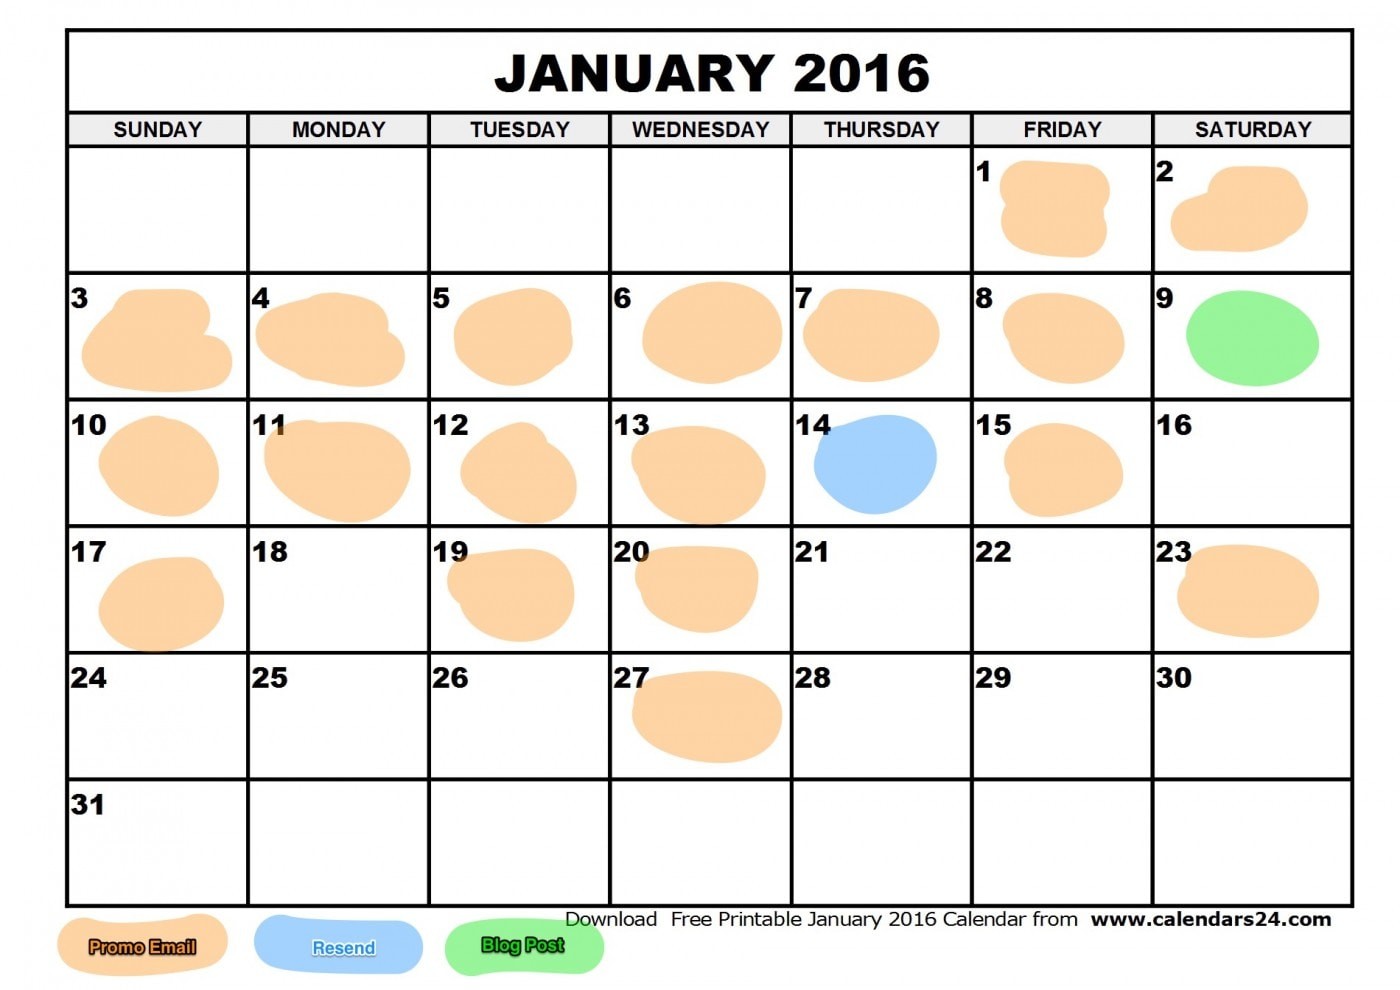 AH January 2016 calendar